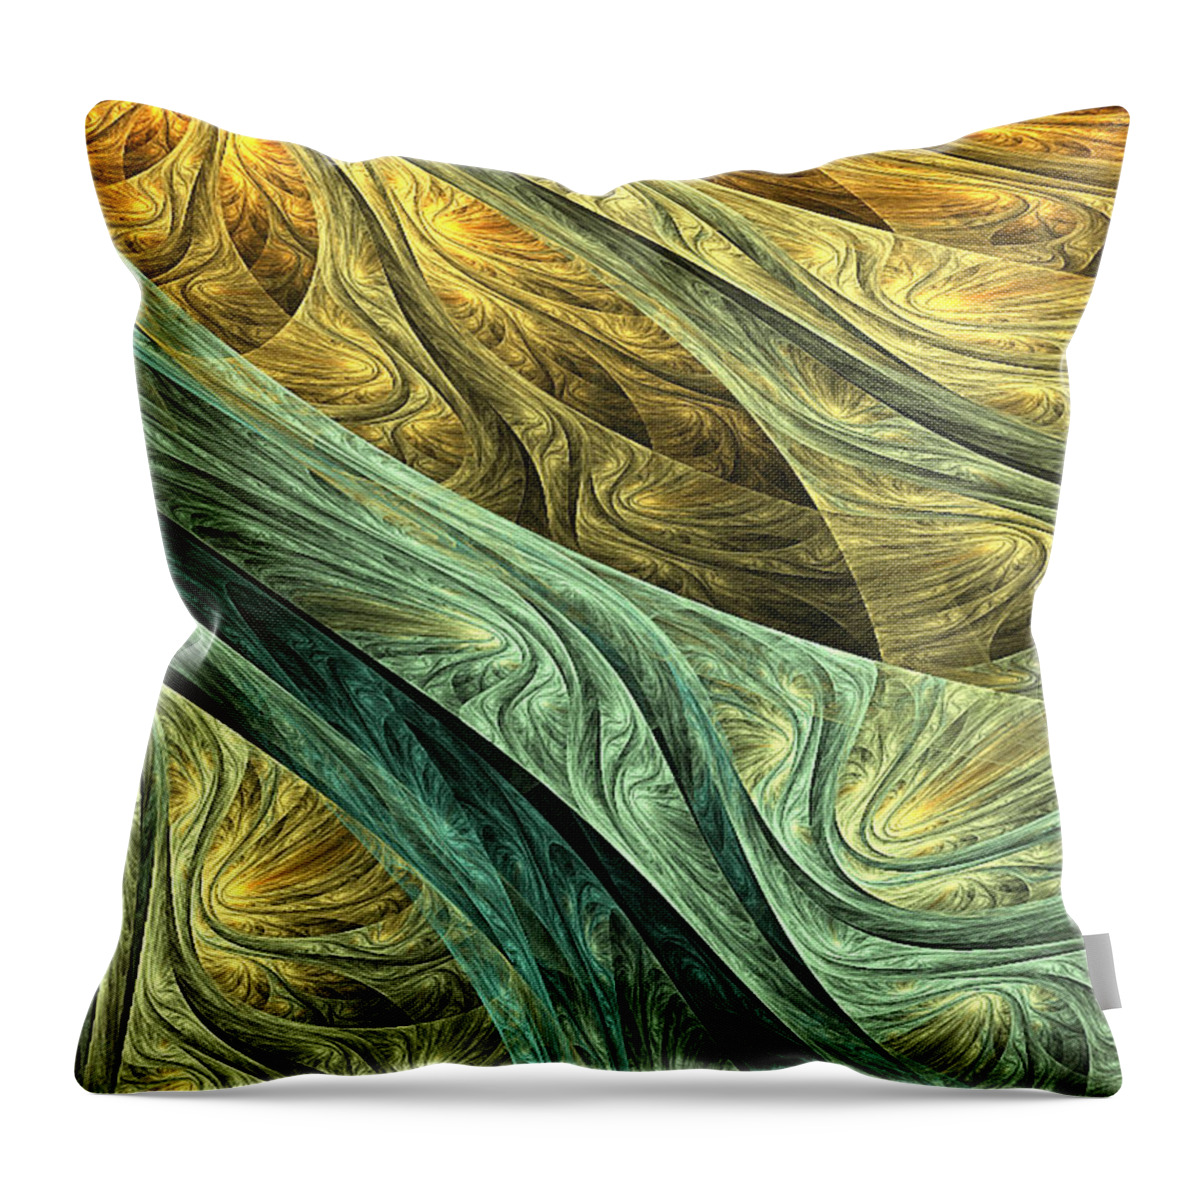 Light Green Throw Pillow featuring the digital art Nowhere by Lourry Legarde